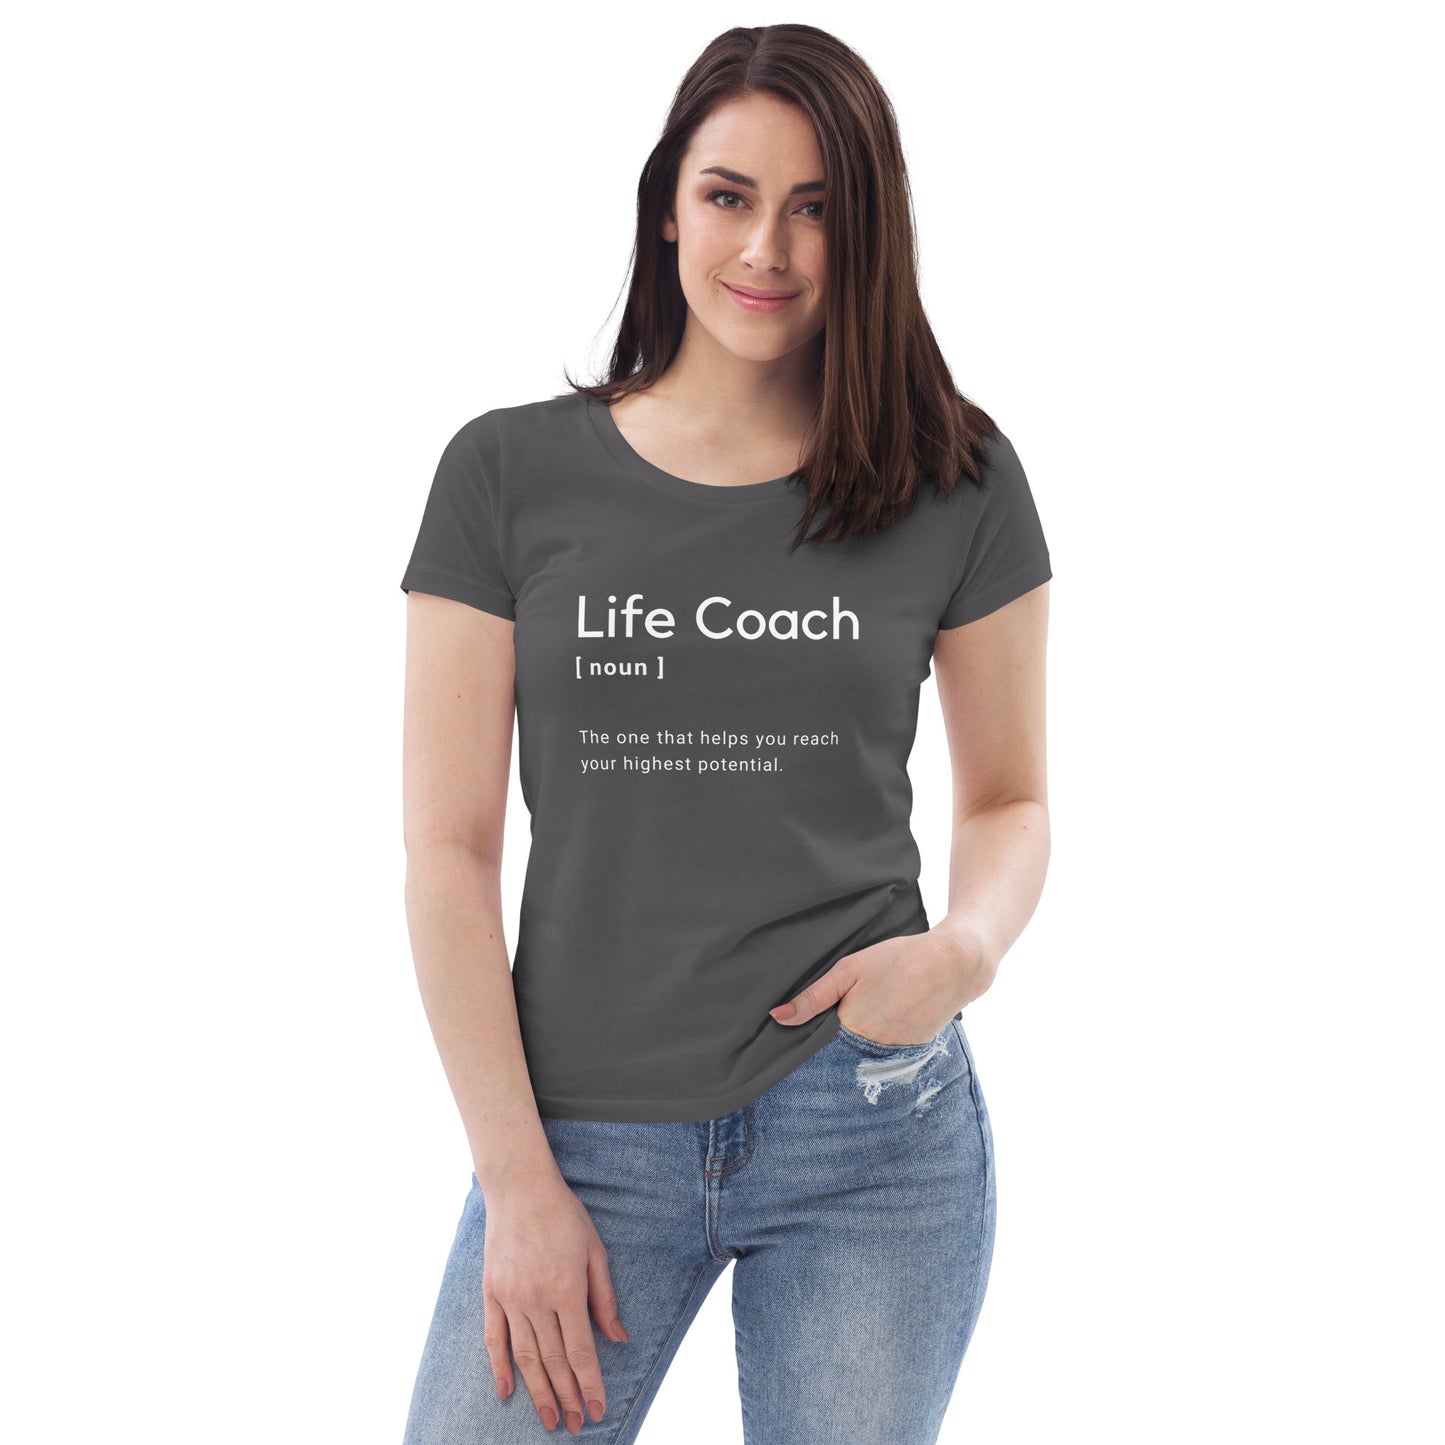 Life coach t-shirt